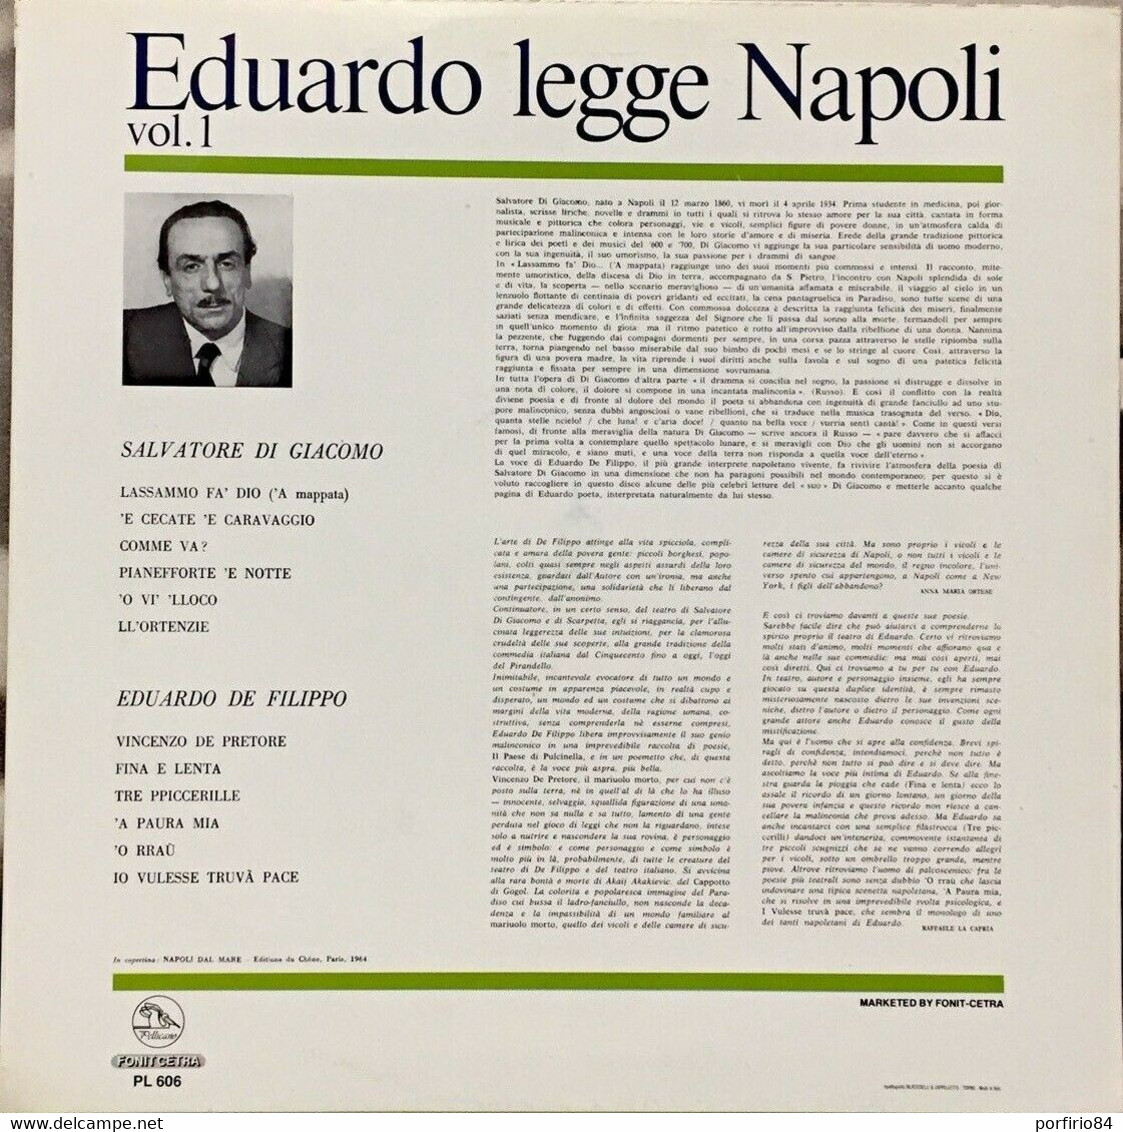 EDUARDO DE FILIPPO RARO LP - EDUARDO LEGGE NAPOLI VOL. 1 SALVATORE DI GIACOMO - Otros - Canción Italiana